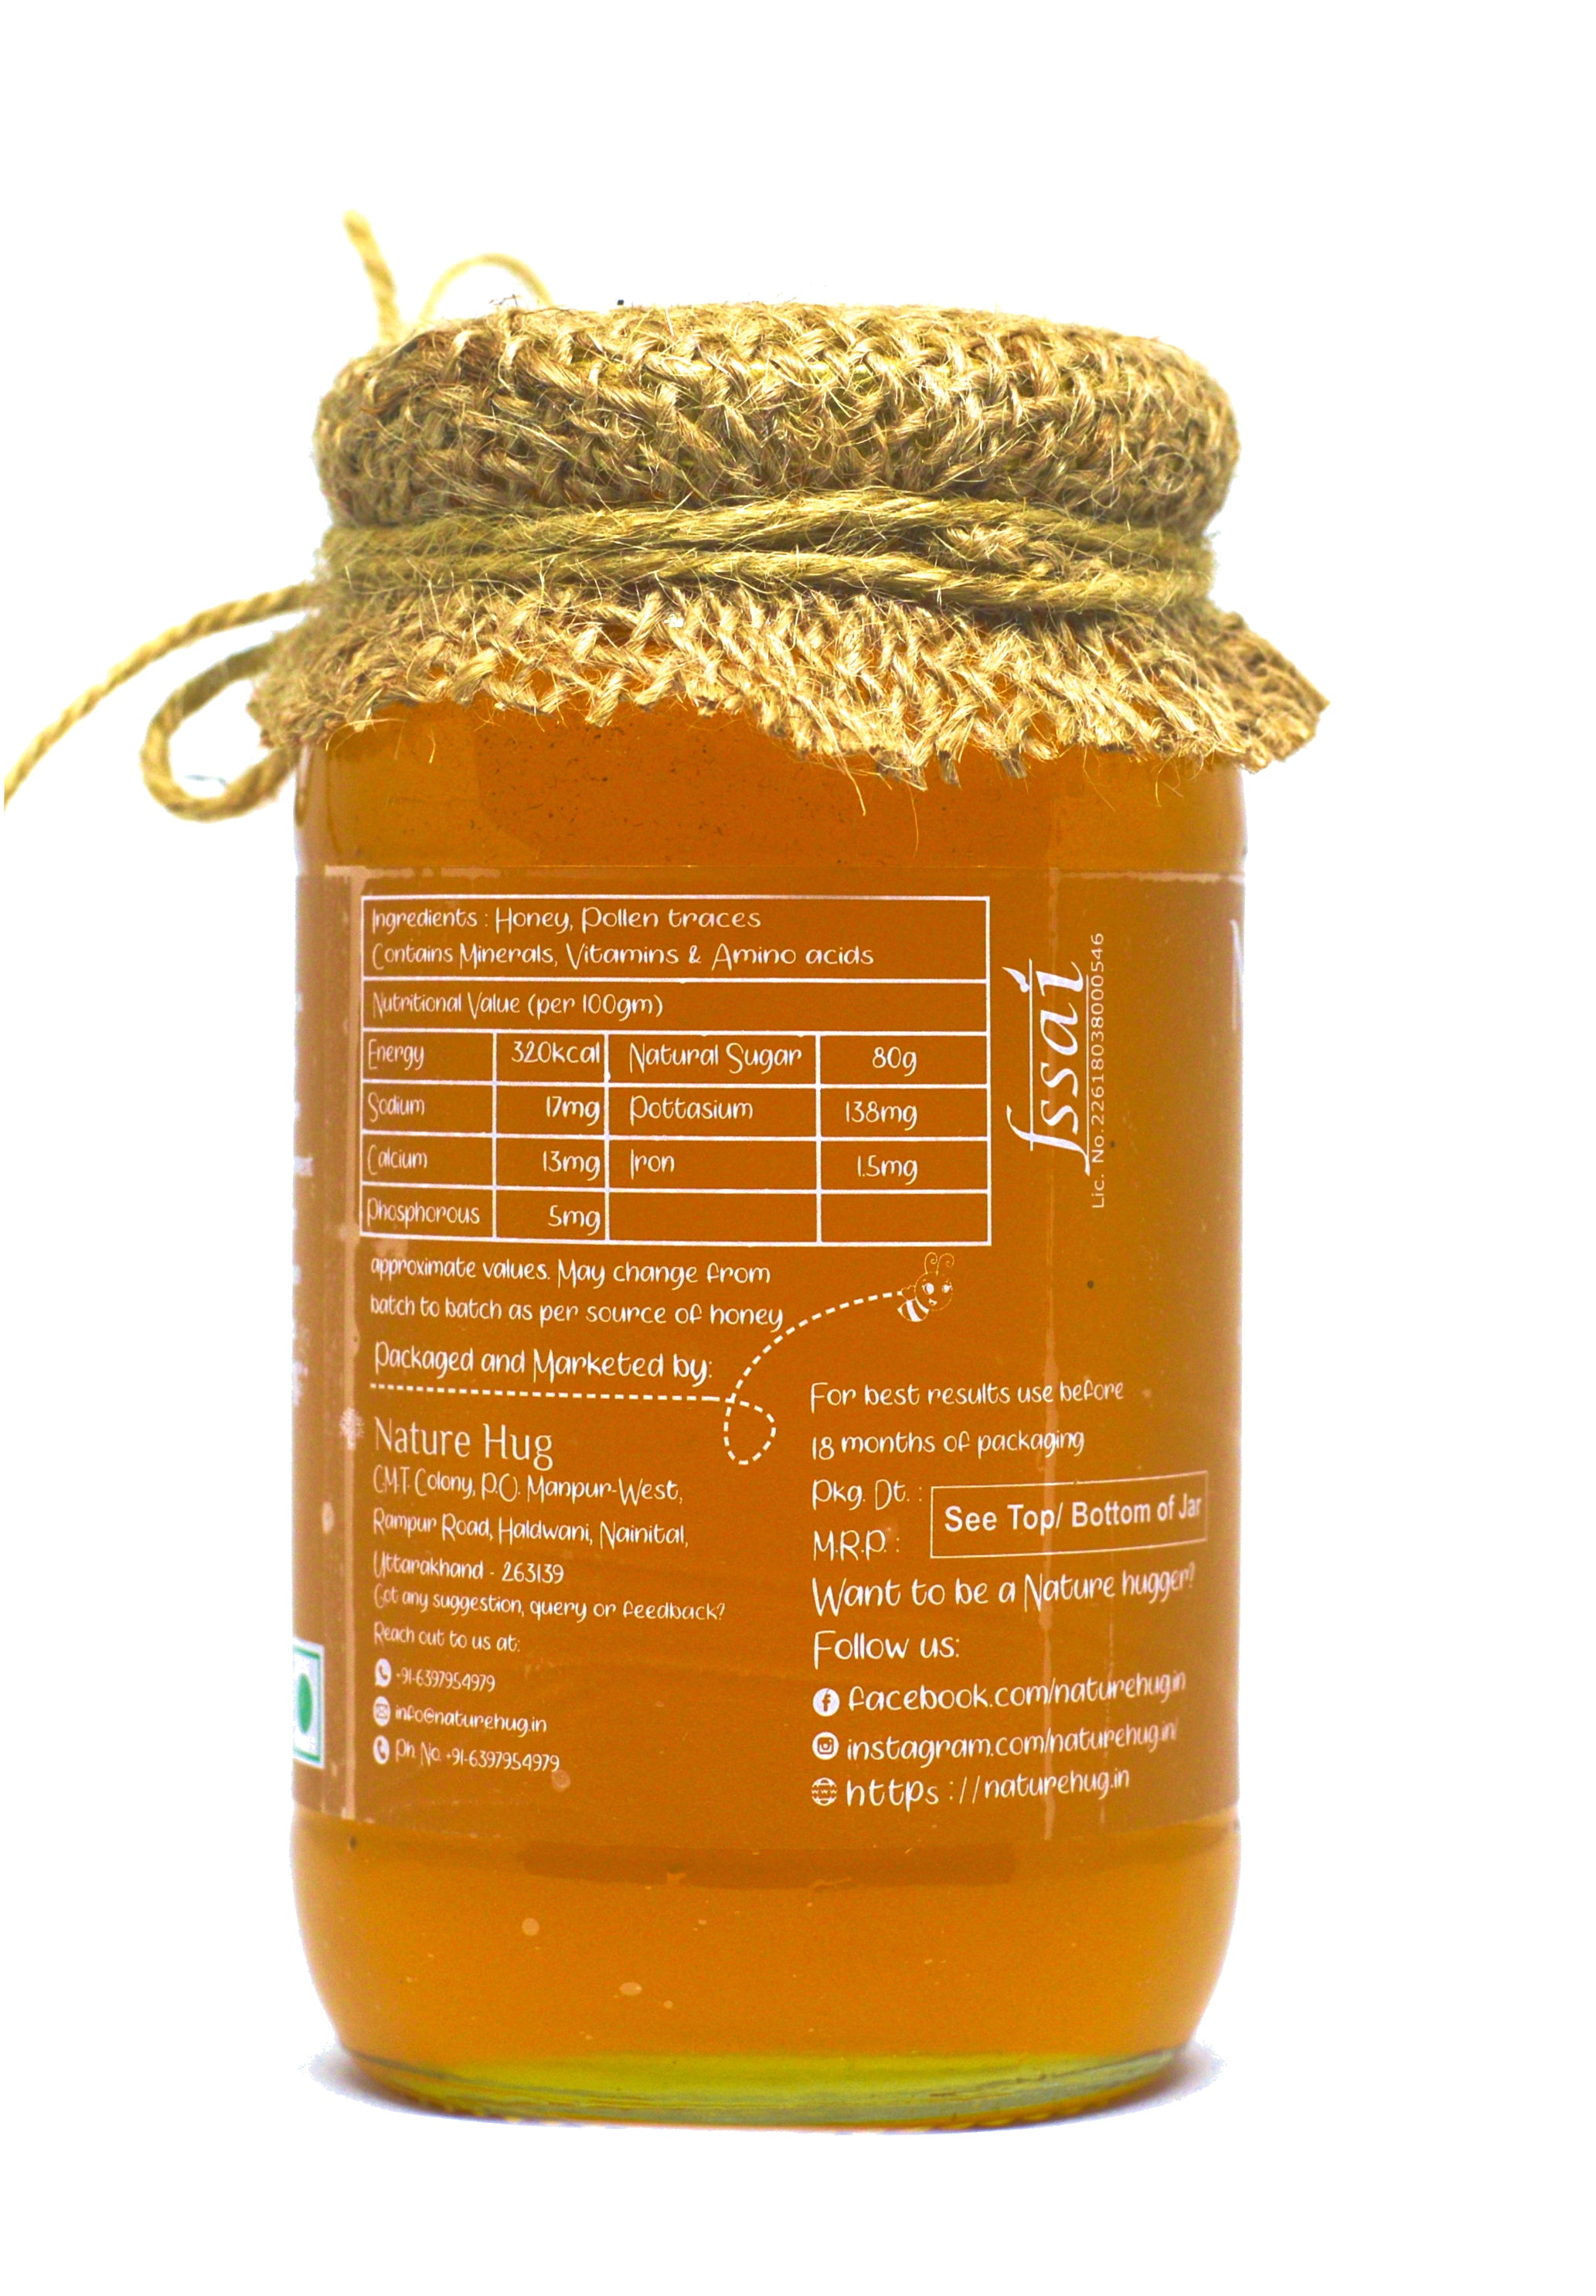 Raw Forest Honey(500g) & Premium Raw Kashmir Honey(500g) Combo